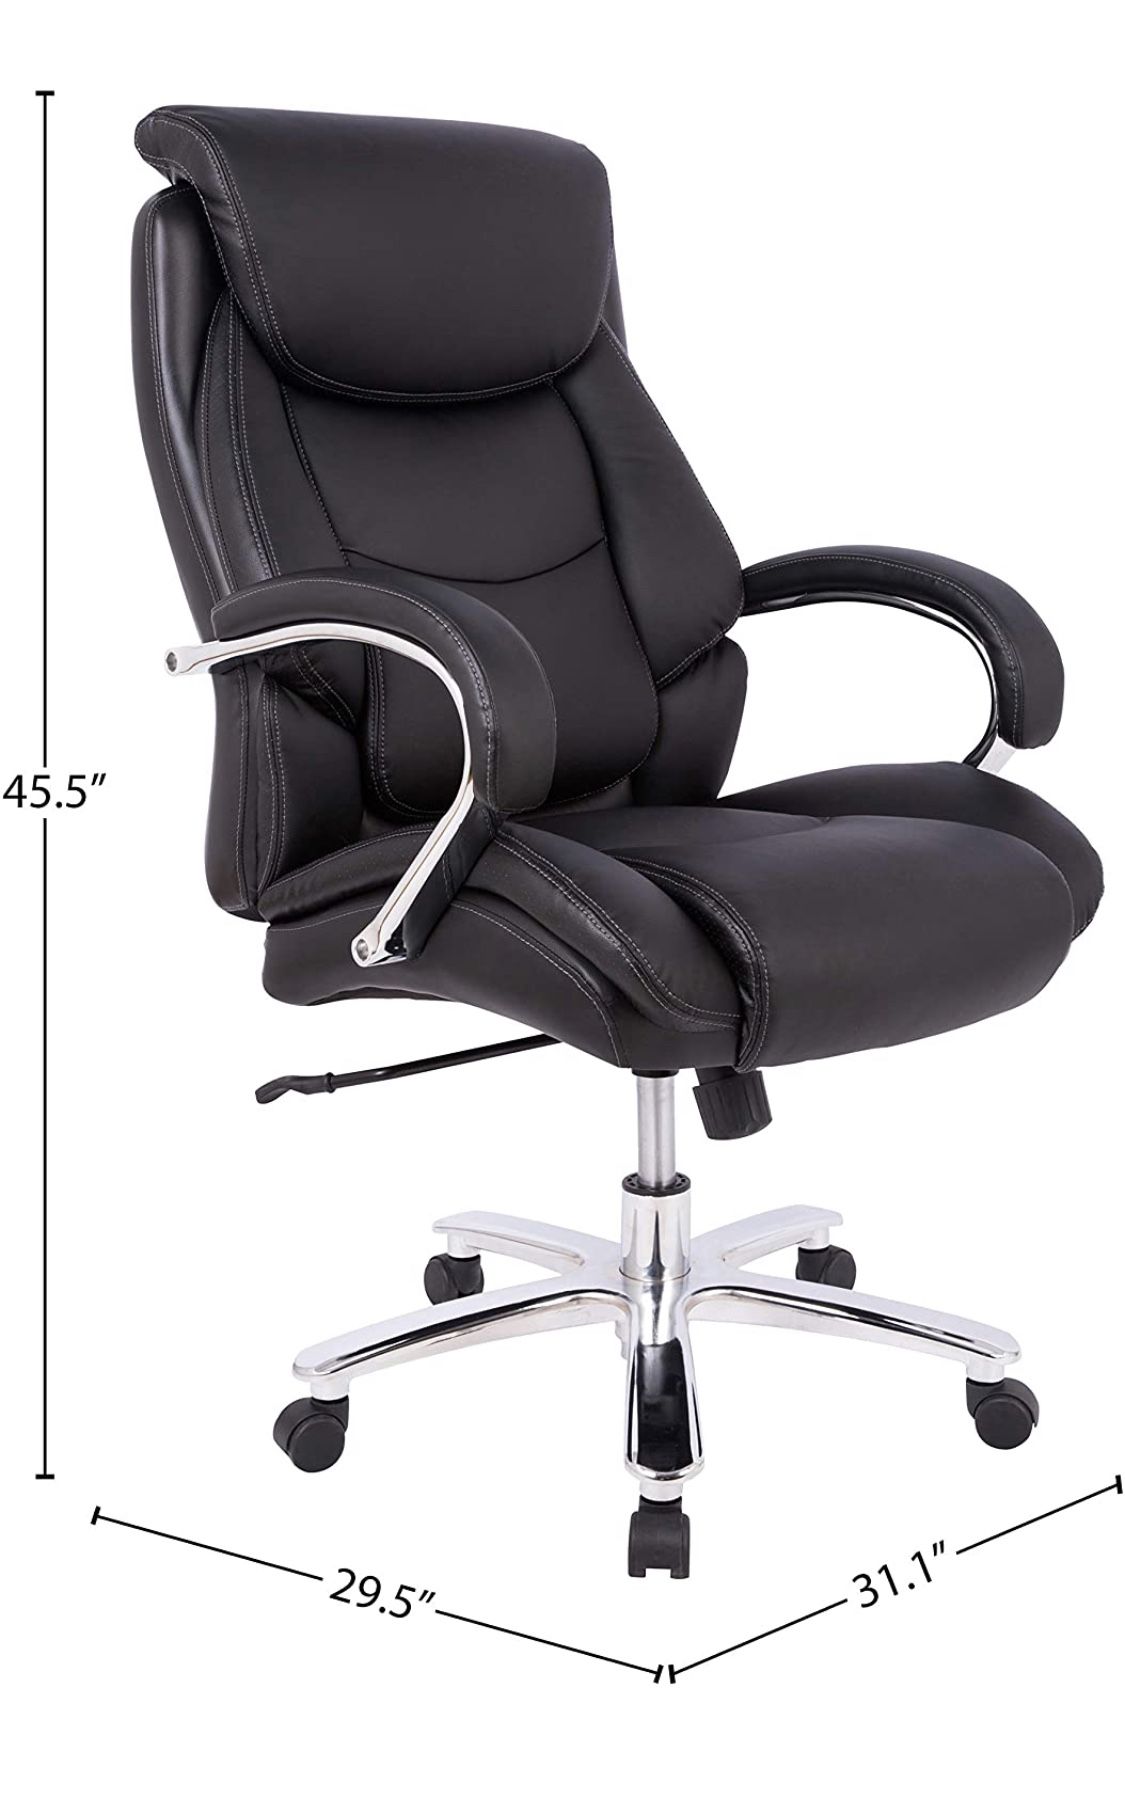 Amazon Basics Big & Tall Executive, Adjustable, Swivel Office Chair with Armrest, Black Bonded Leather